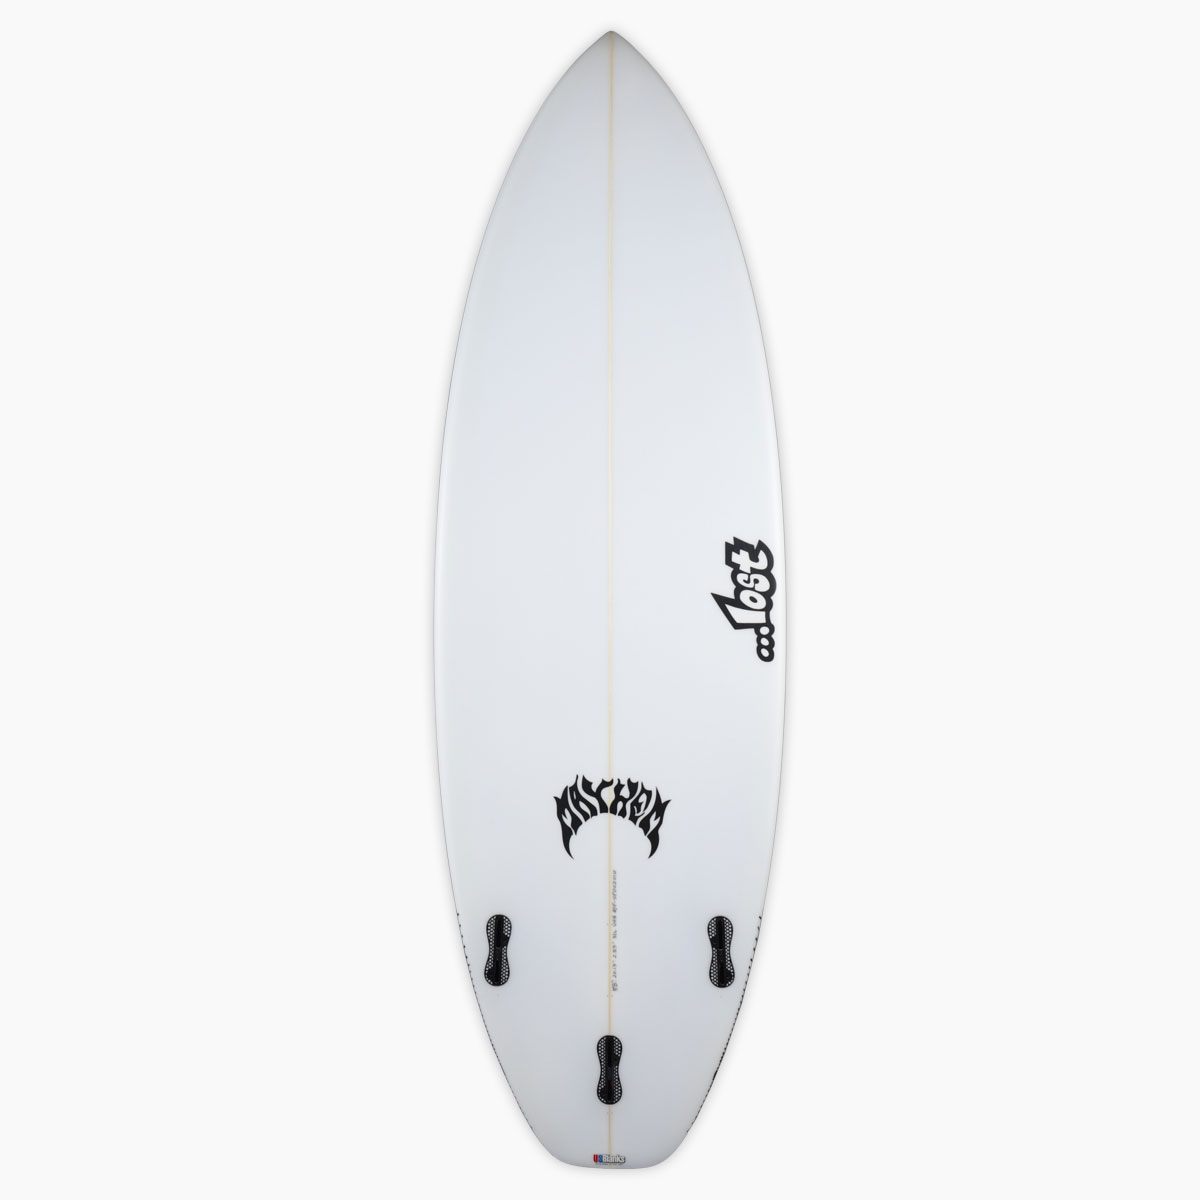 SurfBoardNet / ブランド:LOST SURFBOARDS モデル:SUP DRIVER